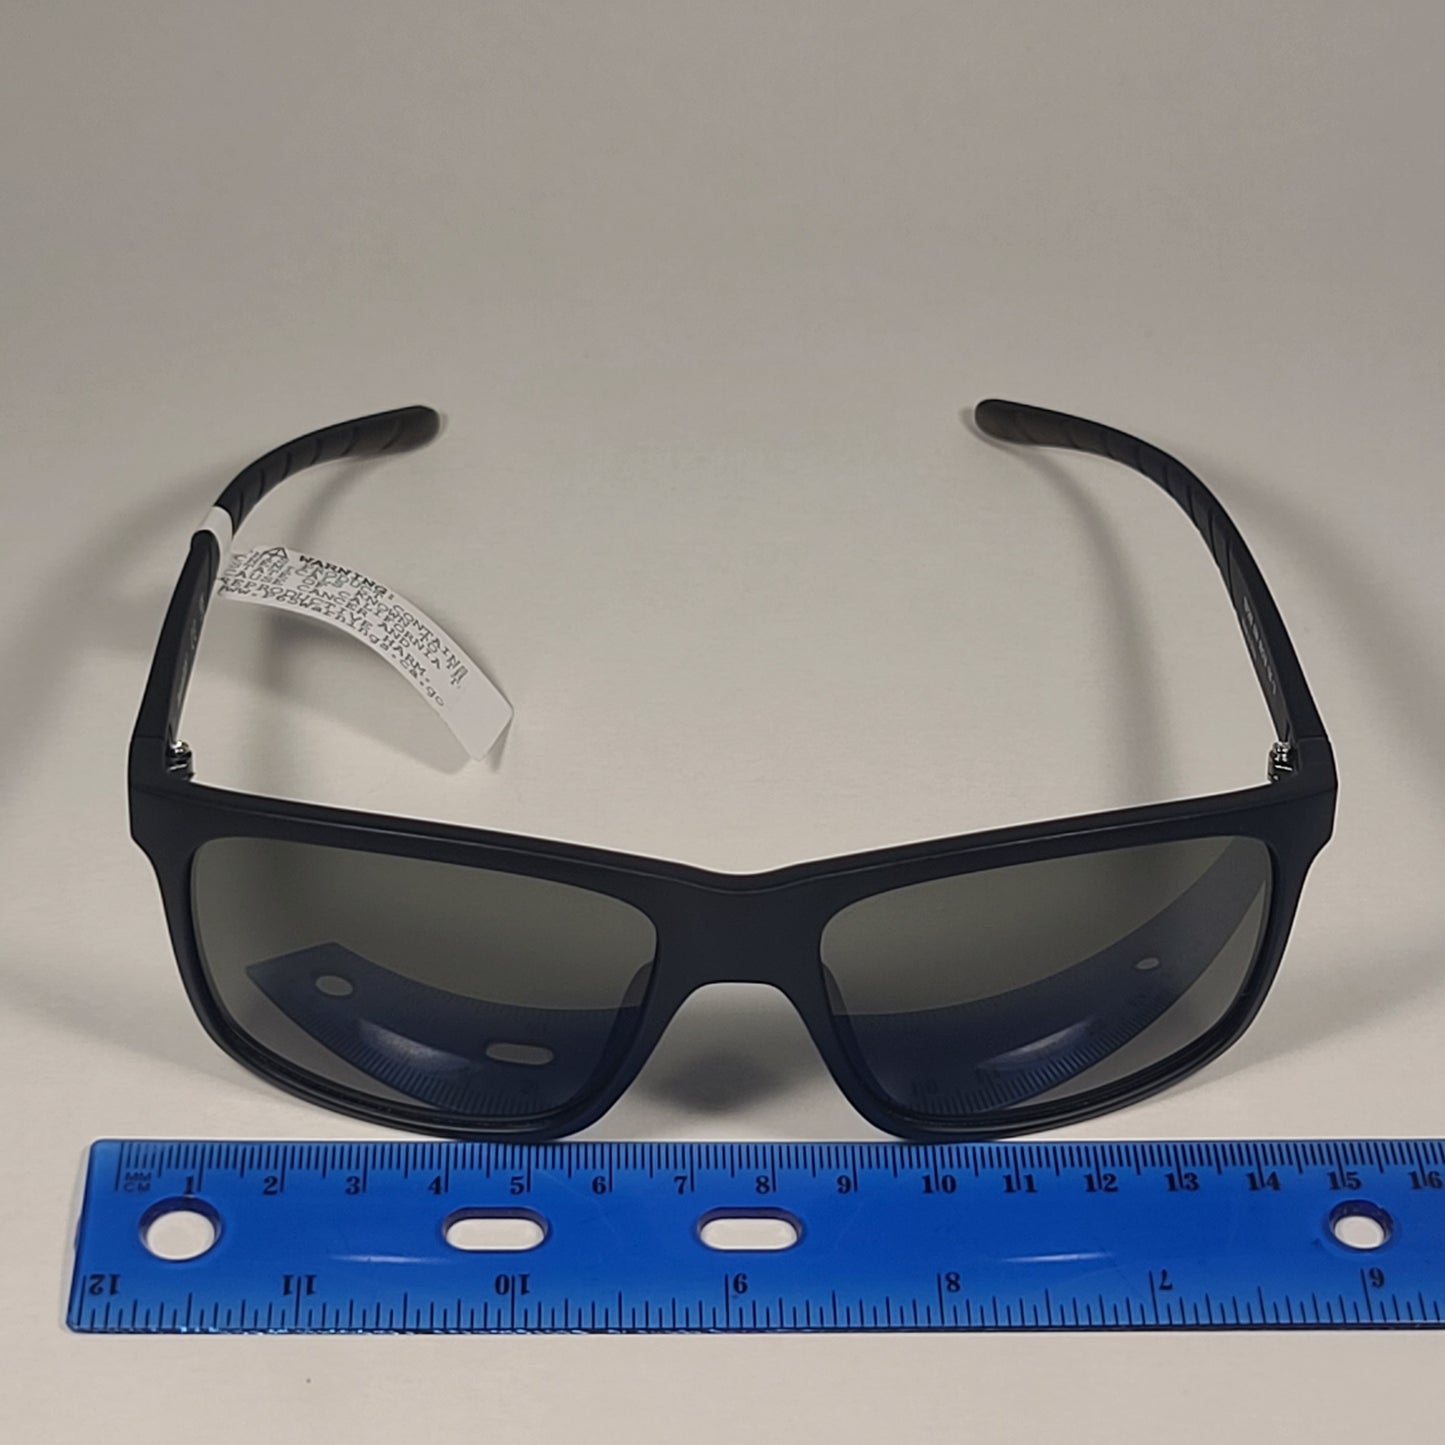 Timberland TB7255 02N Rectangle Sport Sunglasses Matte Black Frame Green Lens - Sunglasses